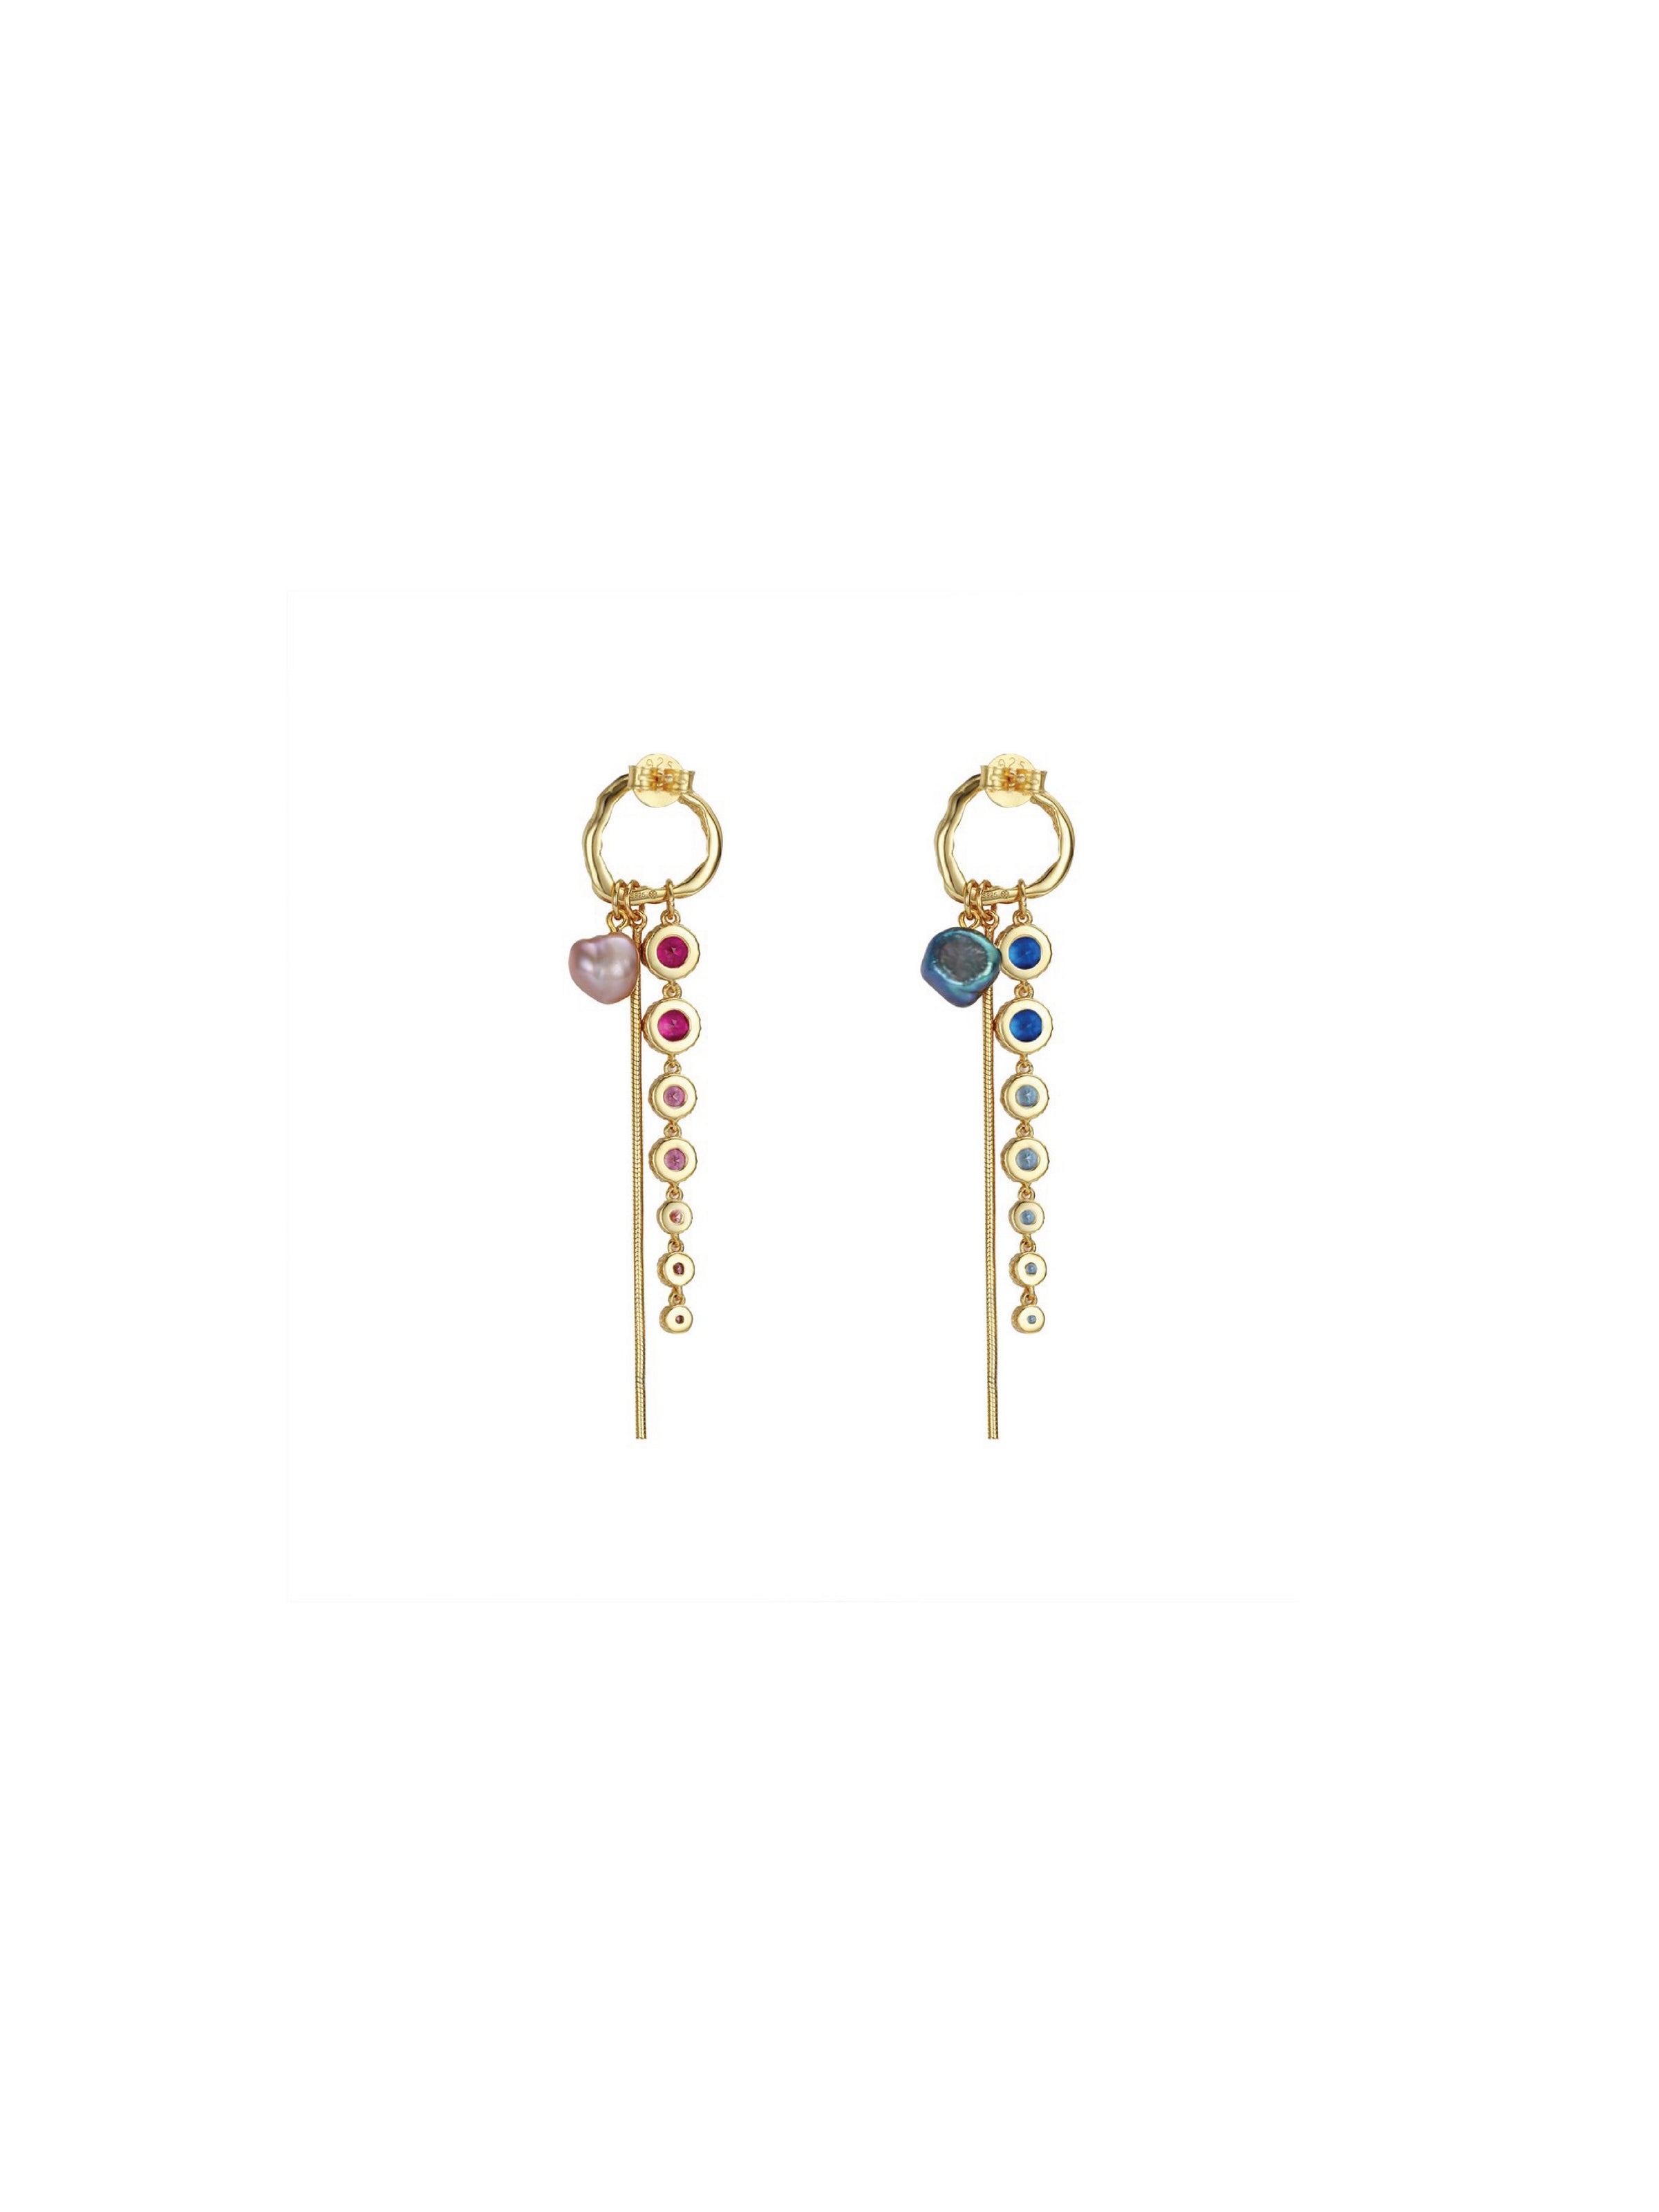 Drops of Jewels Earrings (Pair) - Orange Cube